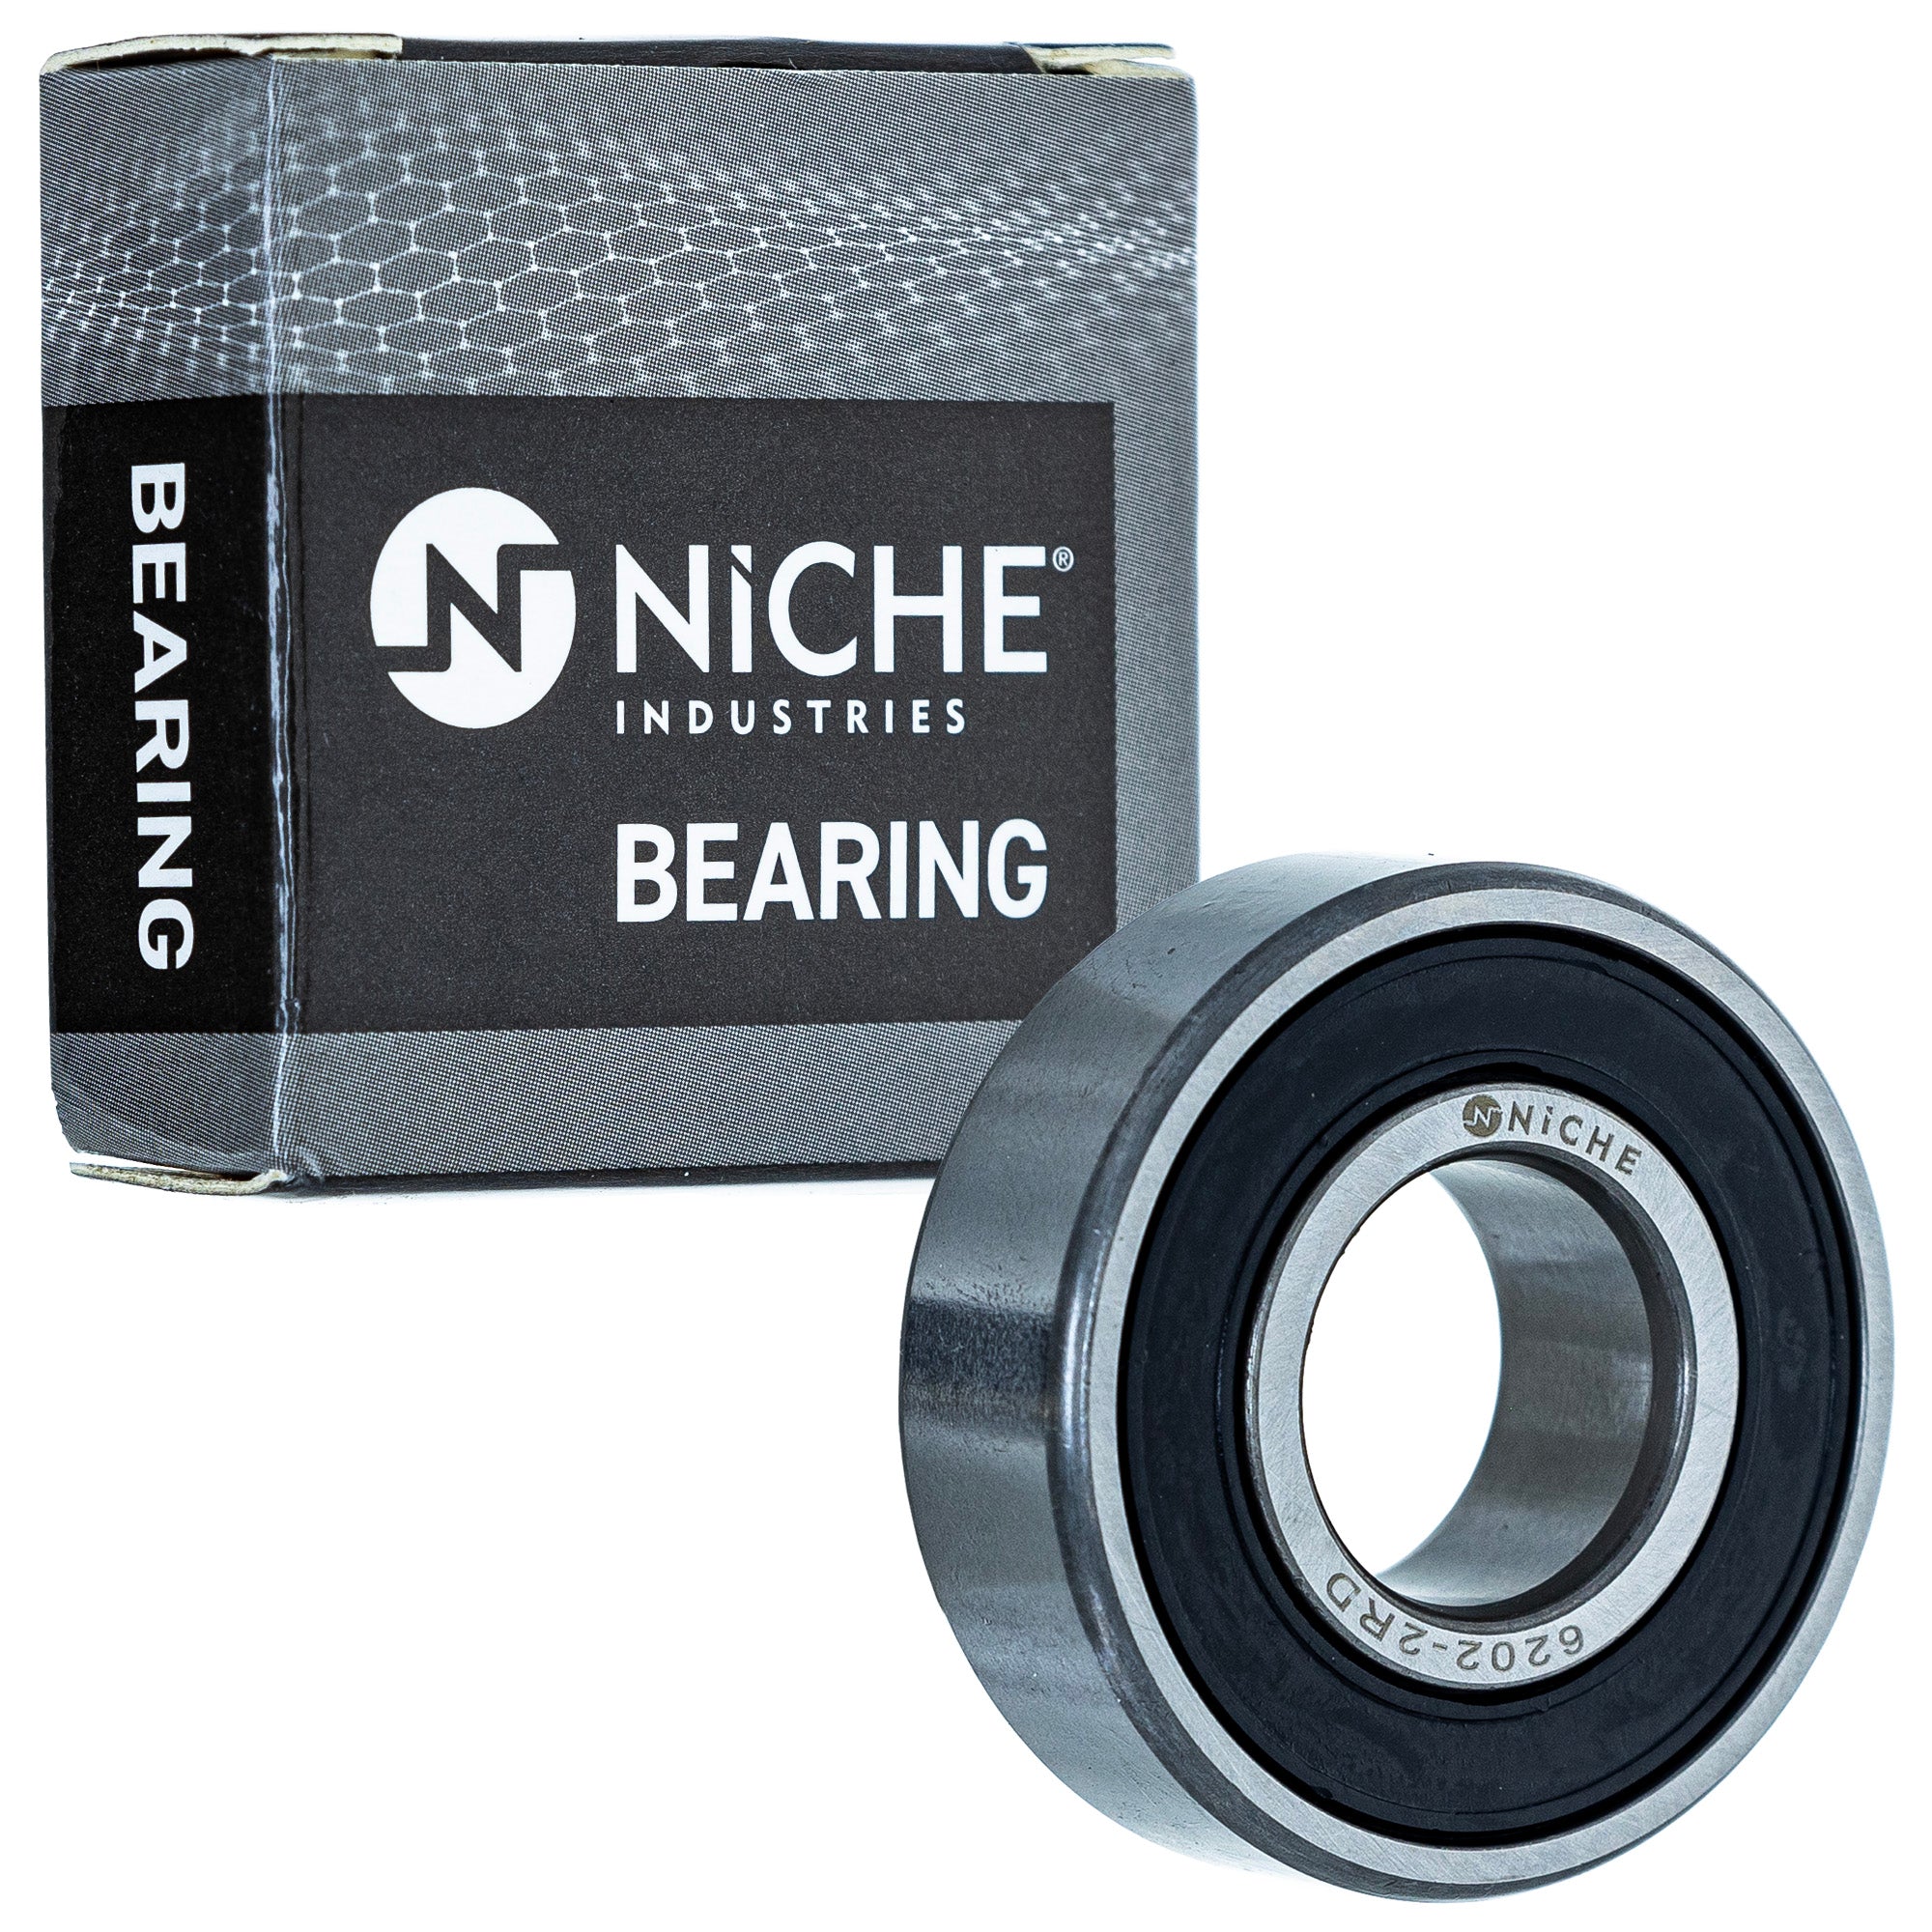 NICHE 519-CBB2252R Bearing 10-Pack for zOTHER XR500R XR350R XR250R